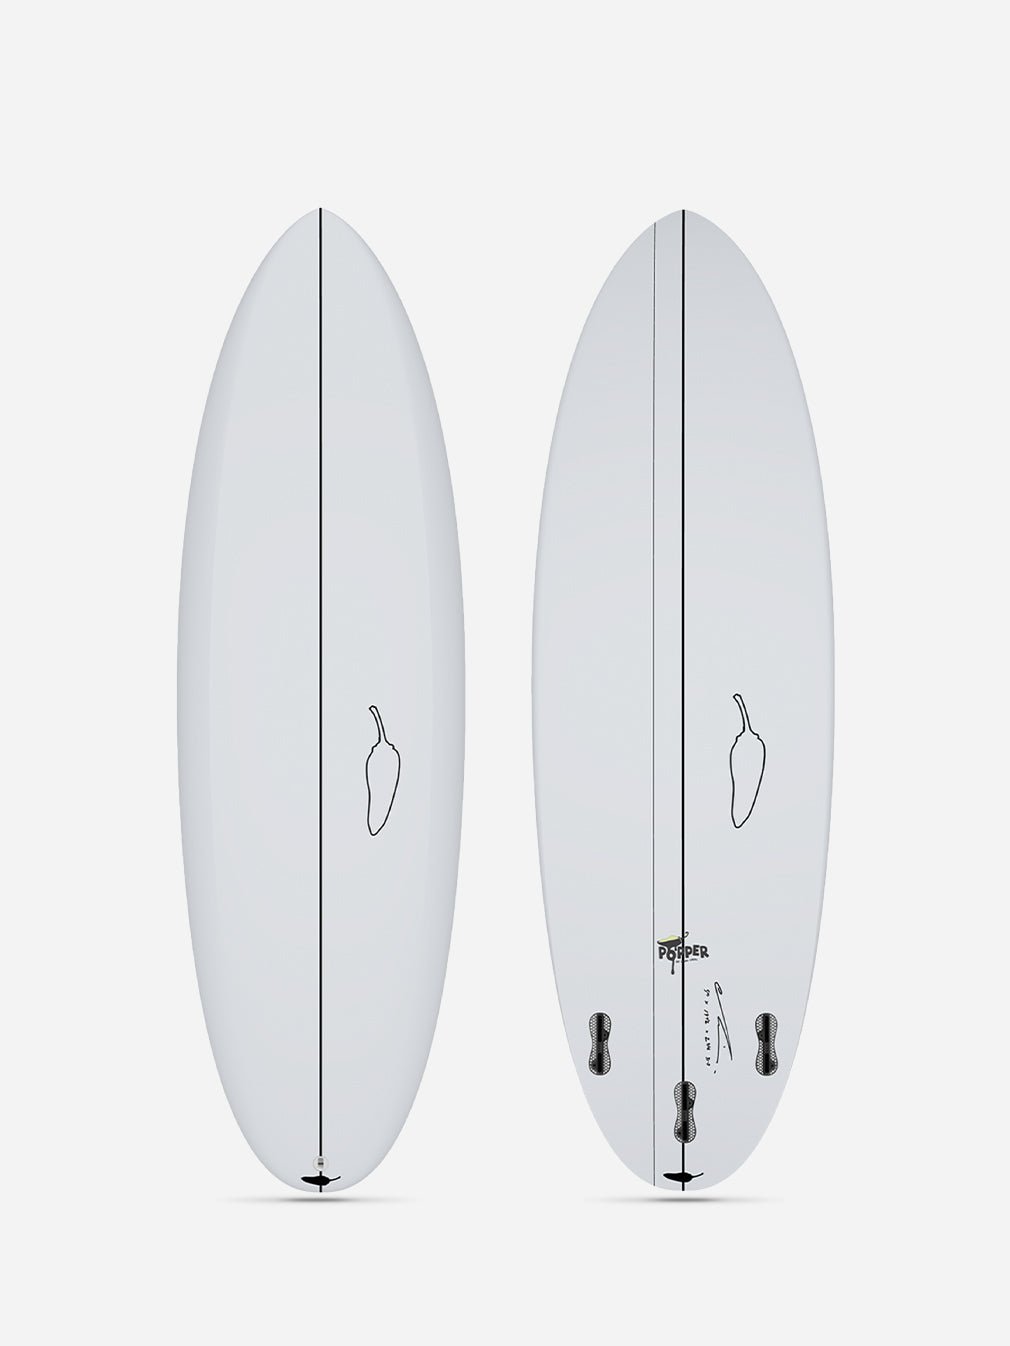 Popper Chilli Surfboard - Youth Lagoon